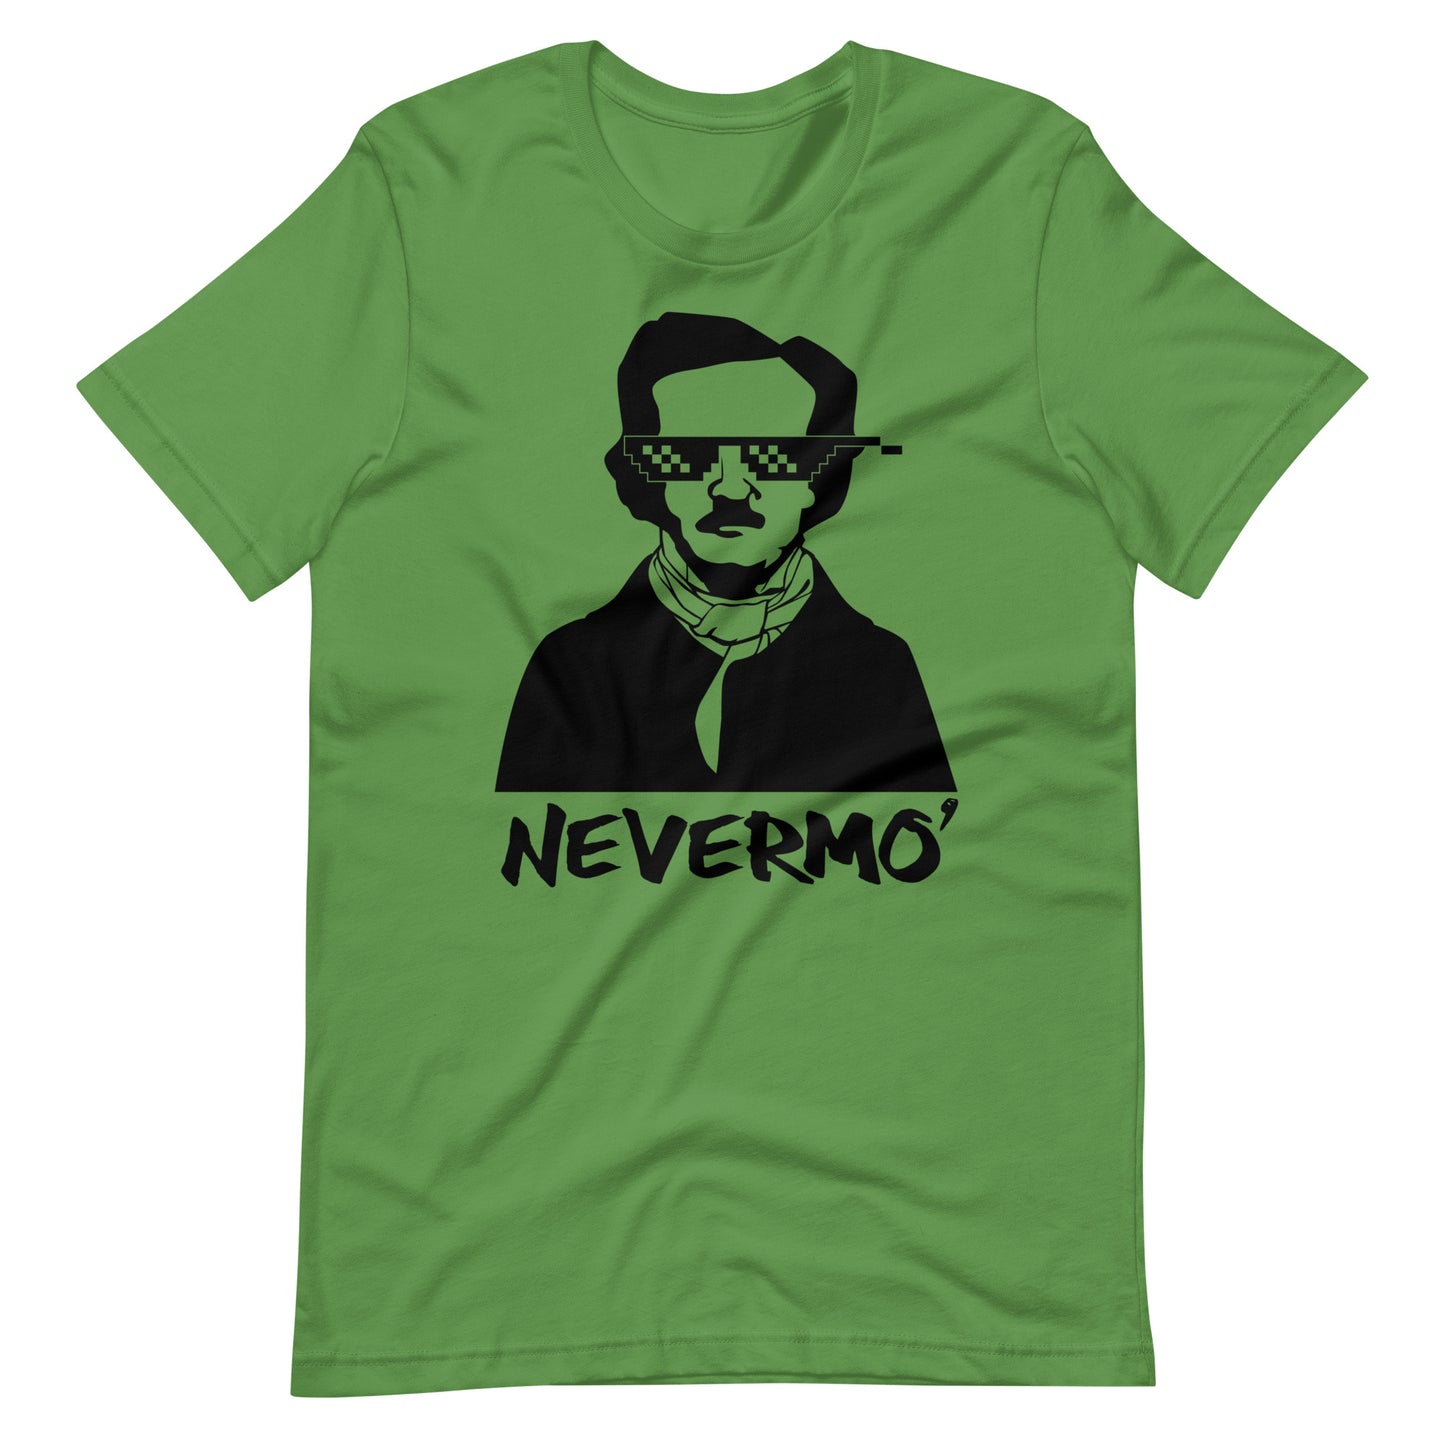 Men's Edgar Allan Poe "The Nevermo" T-Shirt - Leaf Front